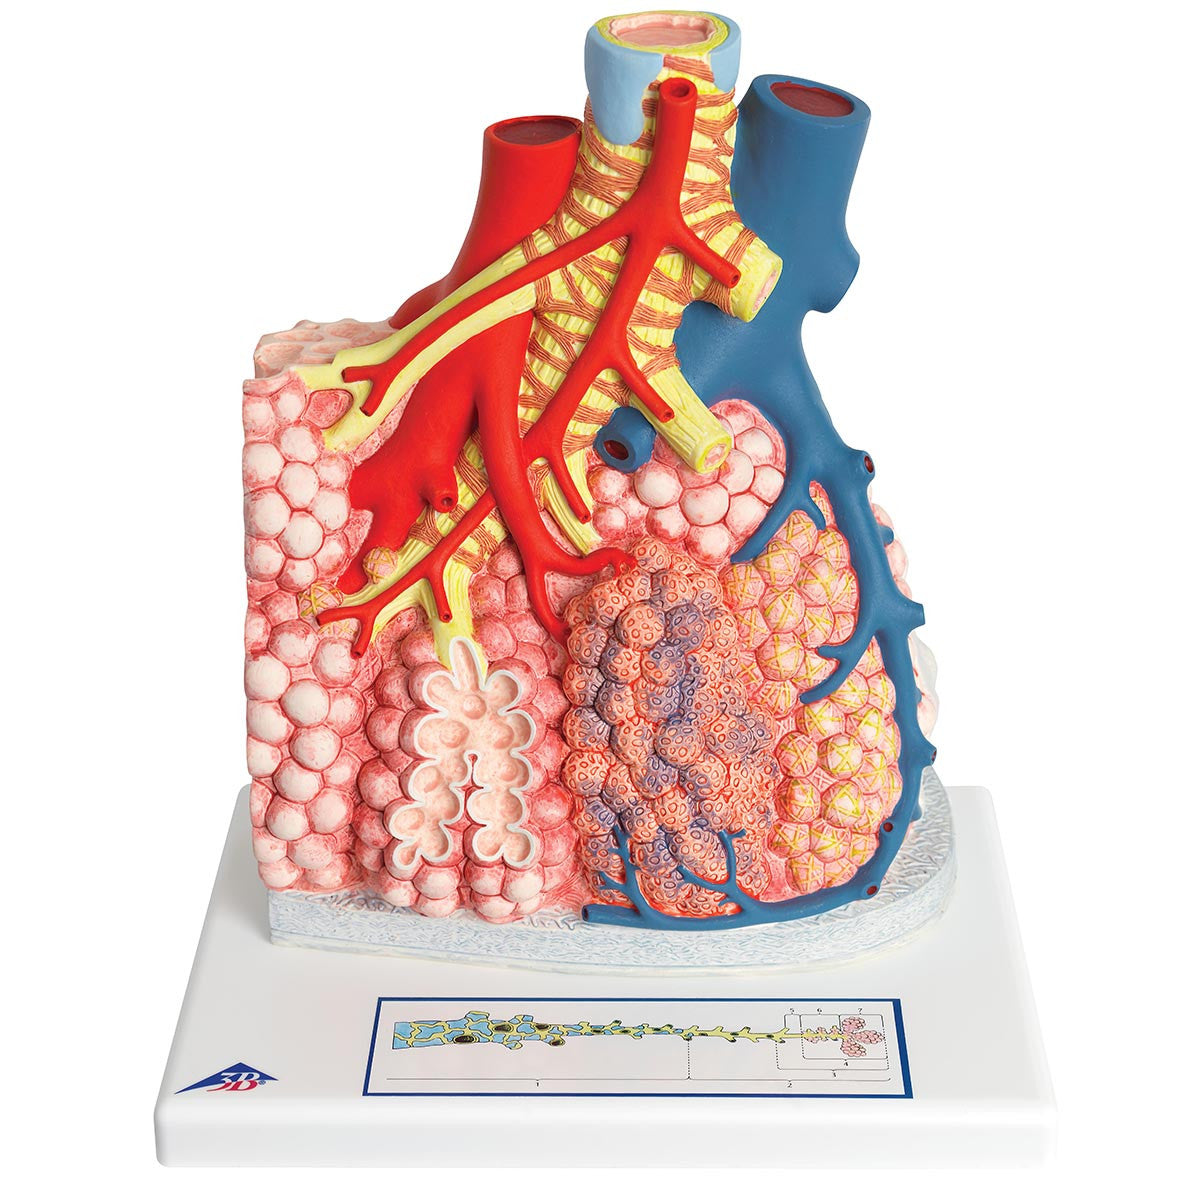 Pulmonary Lobule with Surrounding Blood Vessels | 3B Scientific G60